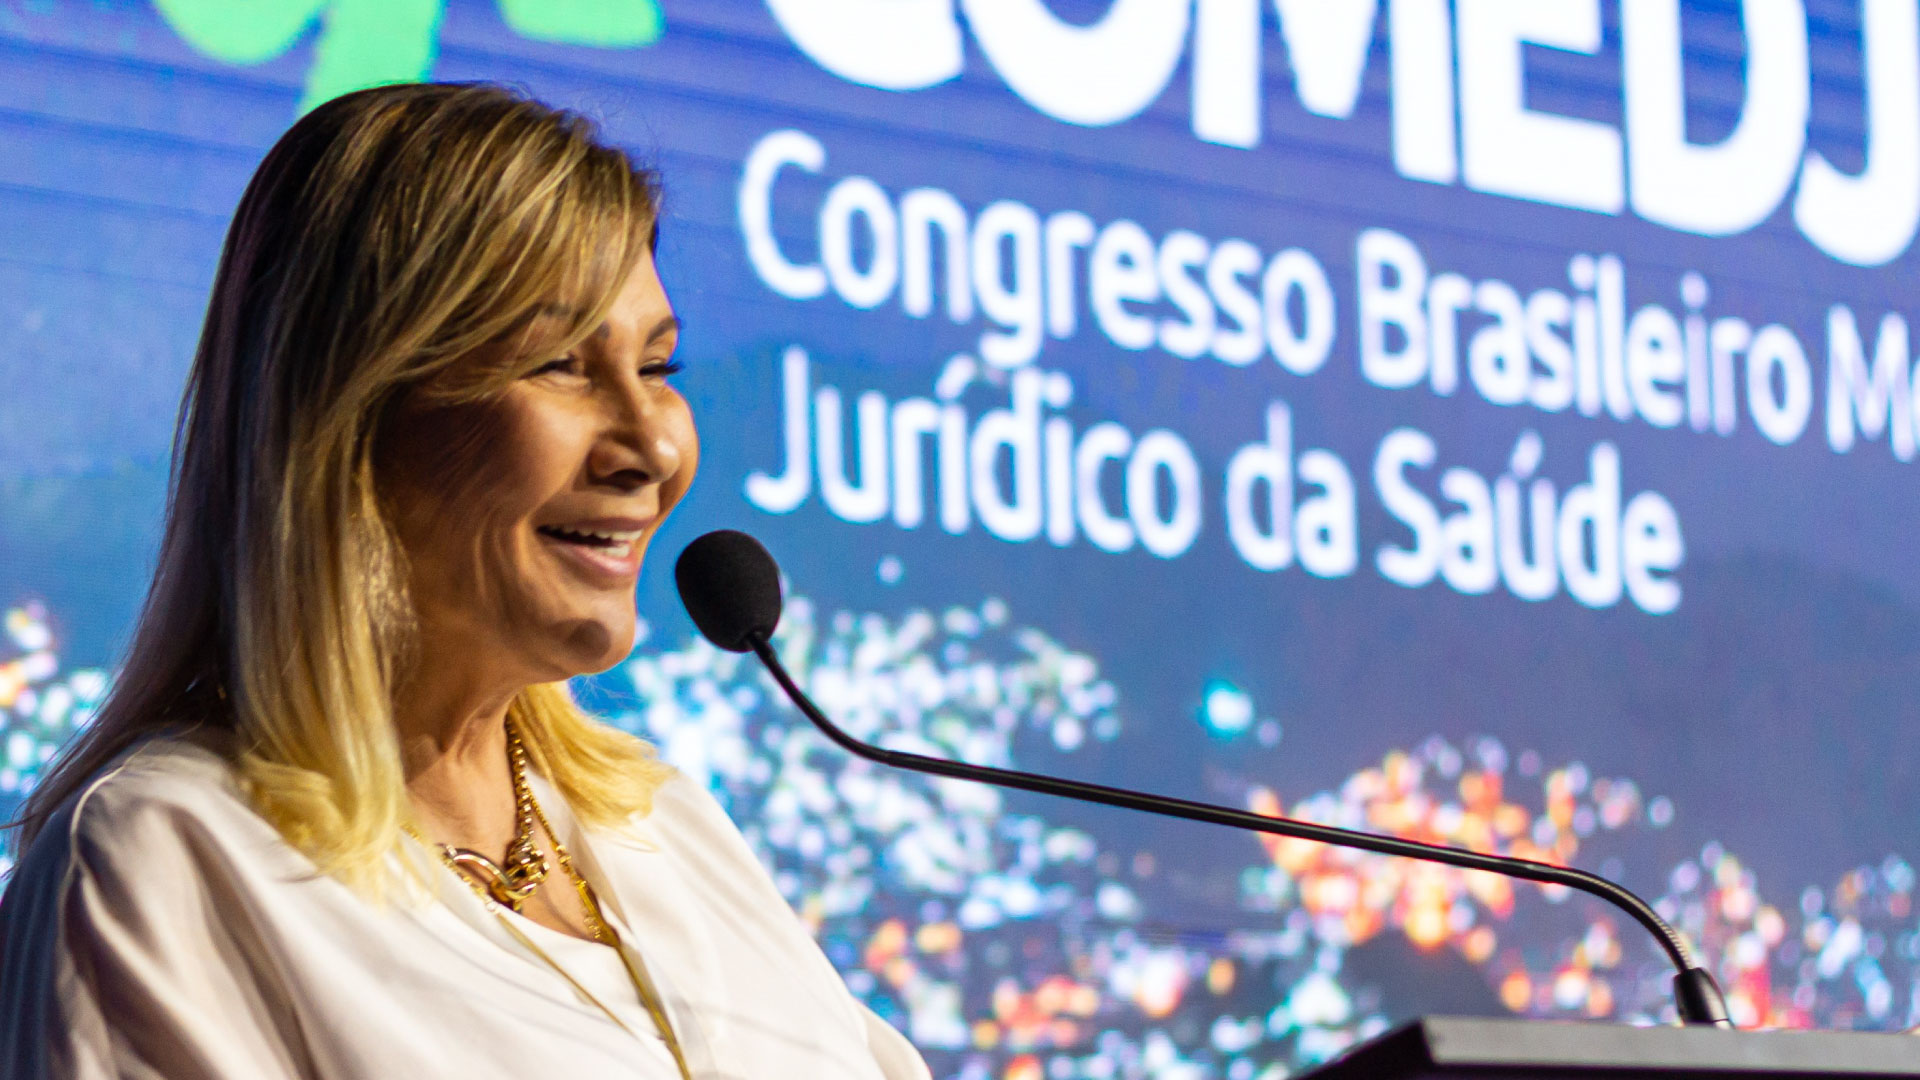 9 congresso brasileiro medico juridico da saude 3